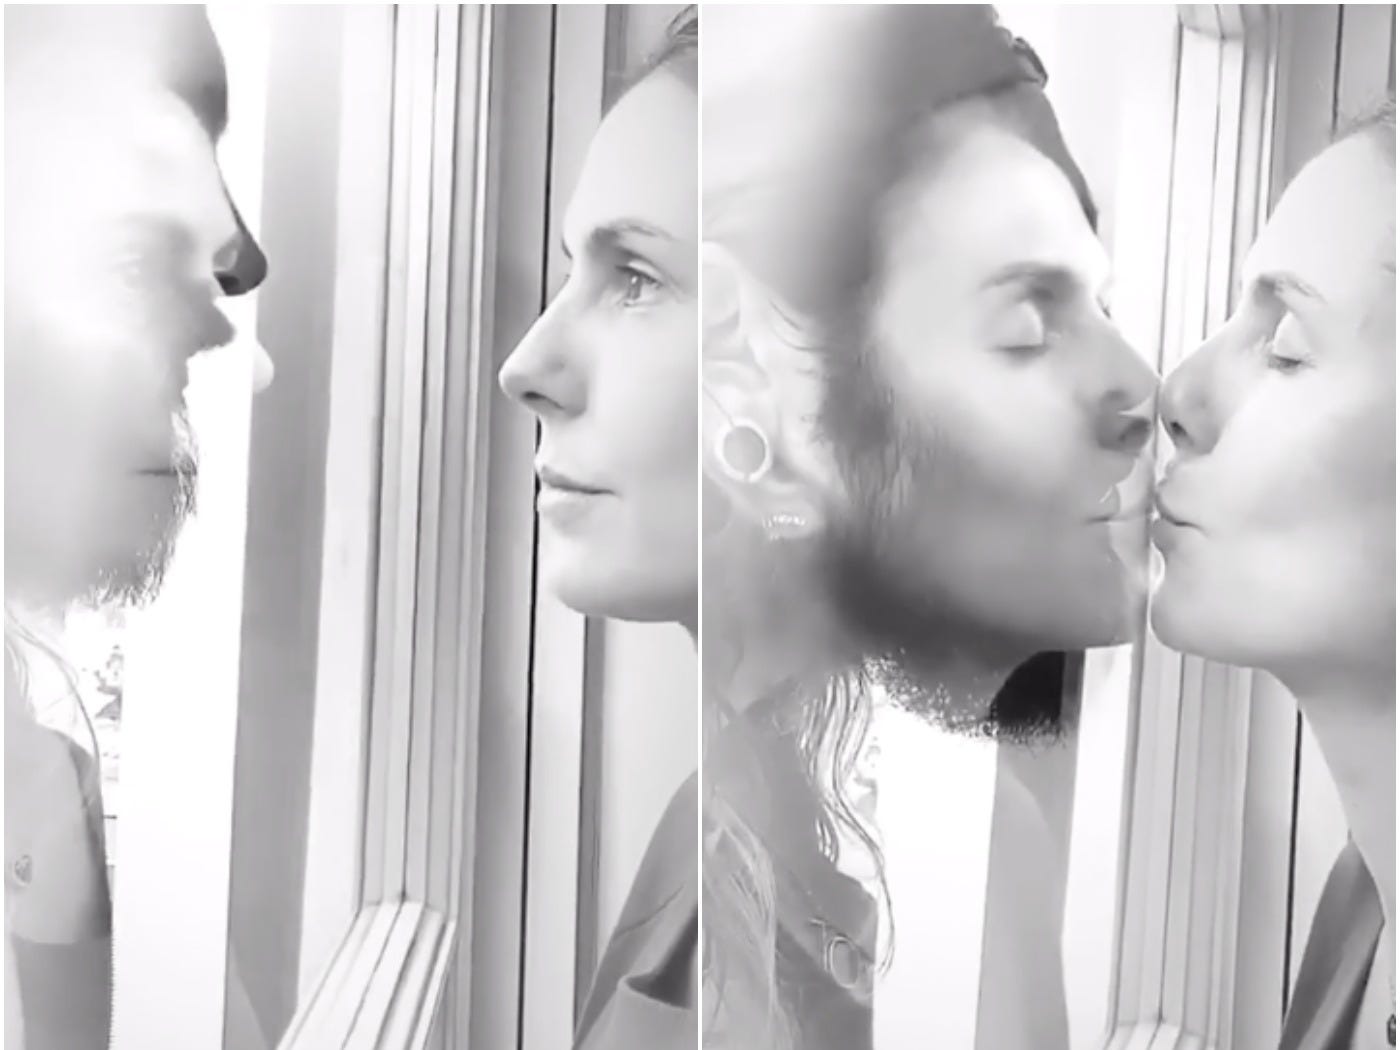 Heidi Klum kissed Tom Klaulitz between a pane of glass. Heidi Klum/Instagram